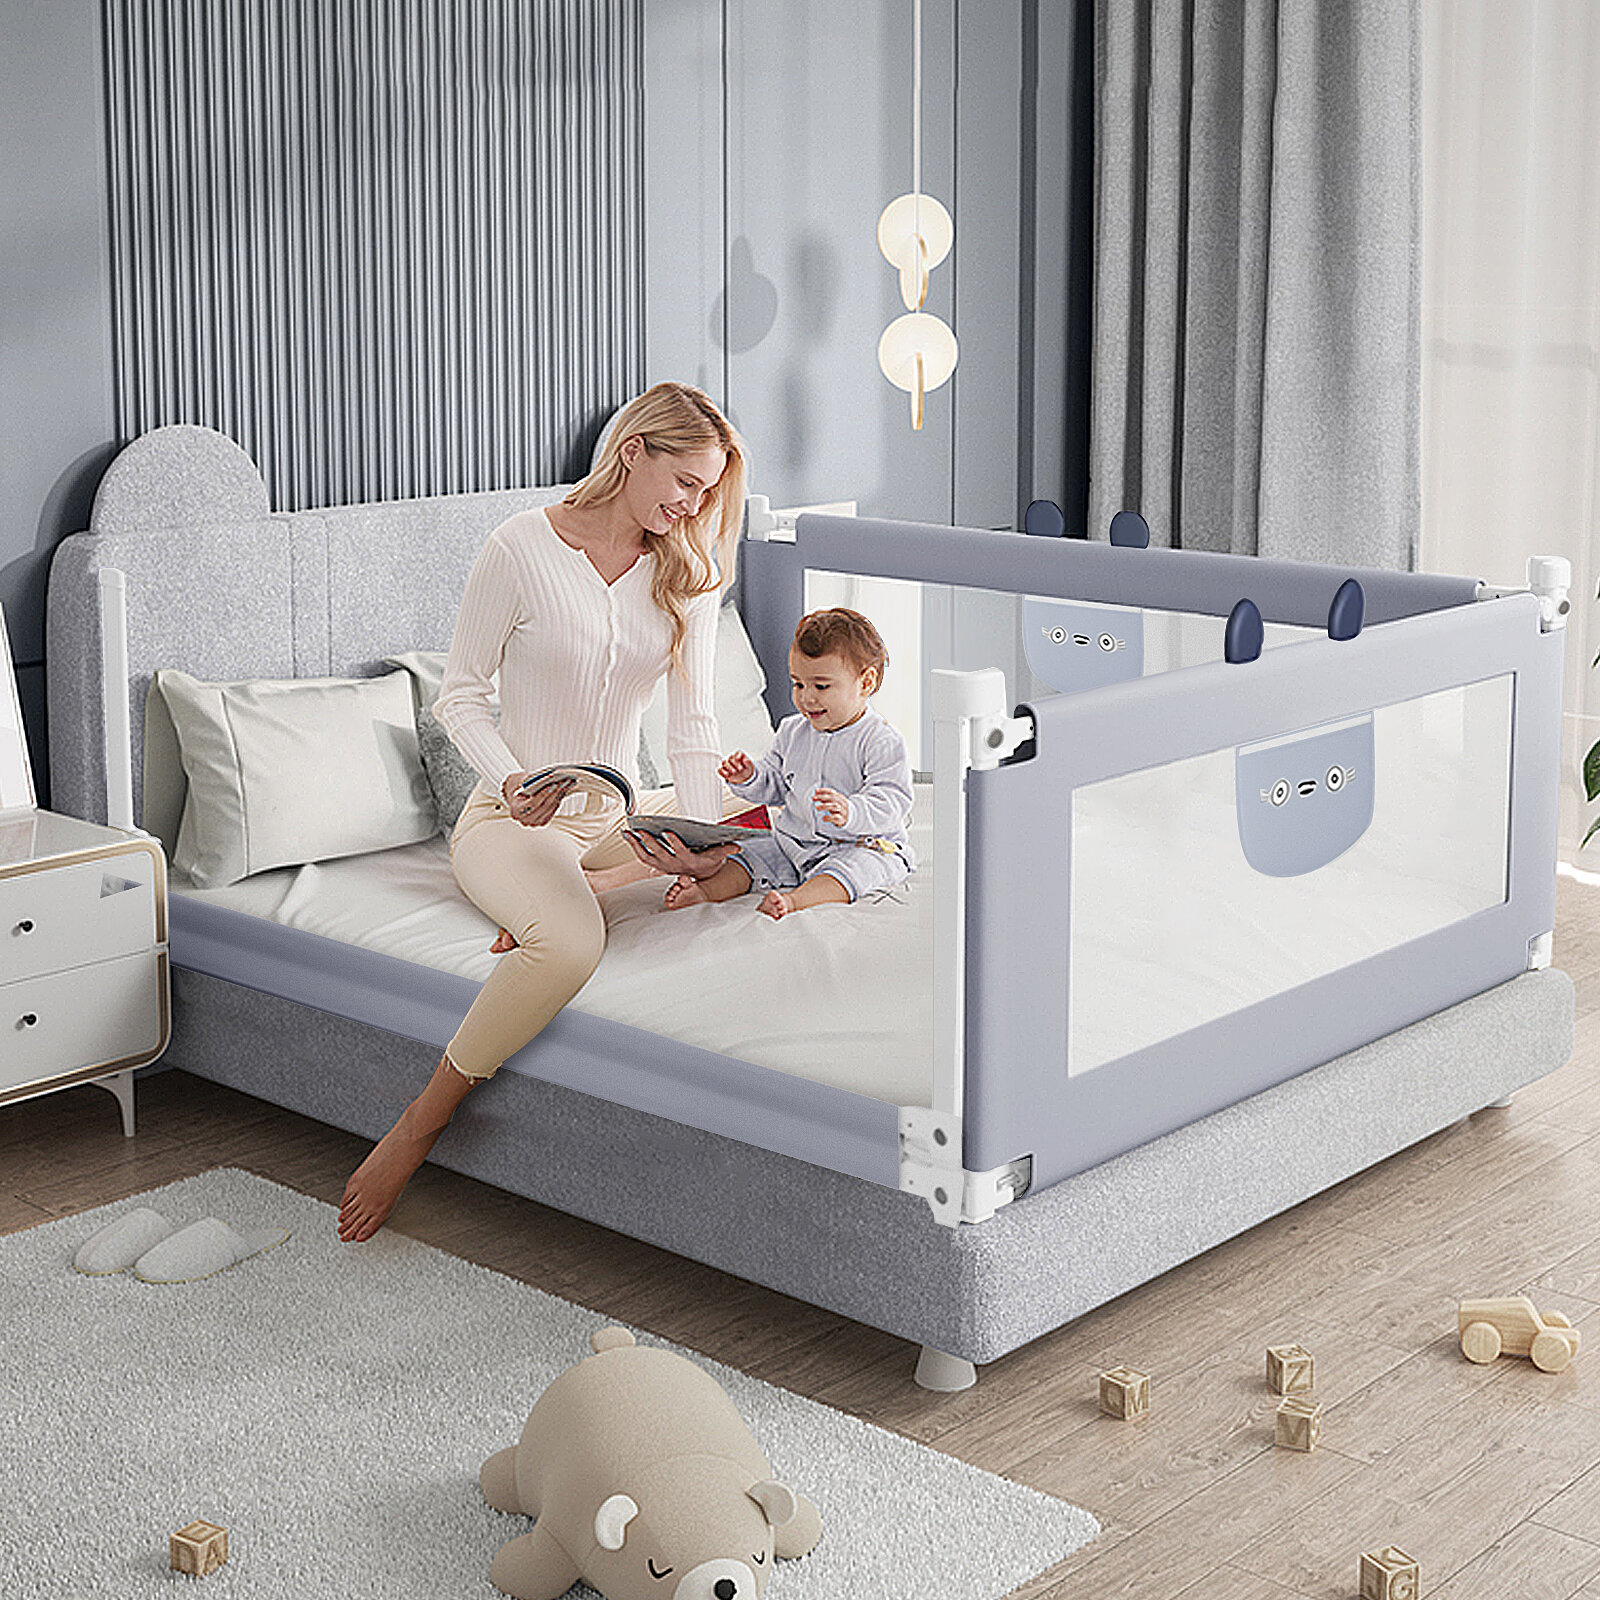 Image of 15m/18m/20m Adjustable Folding Kids Safety Bed Rail/BedRail Cot Guard Protecte Child Toddler